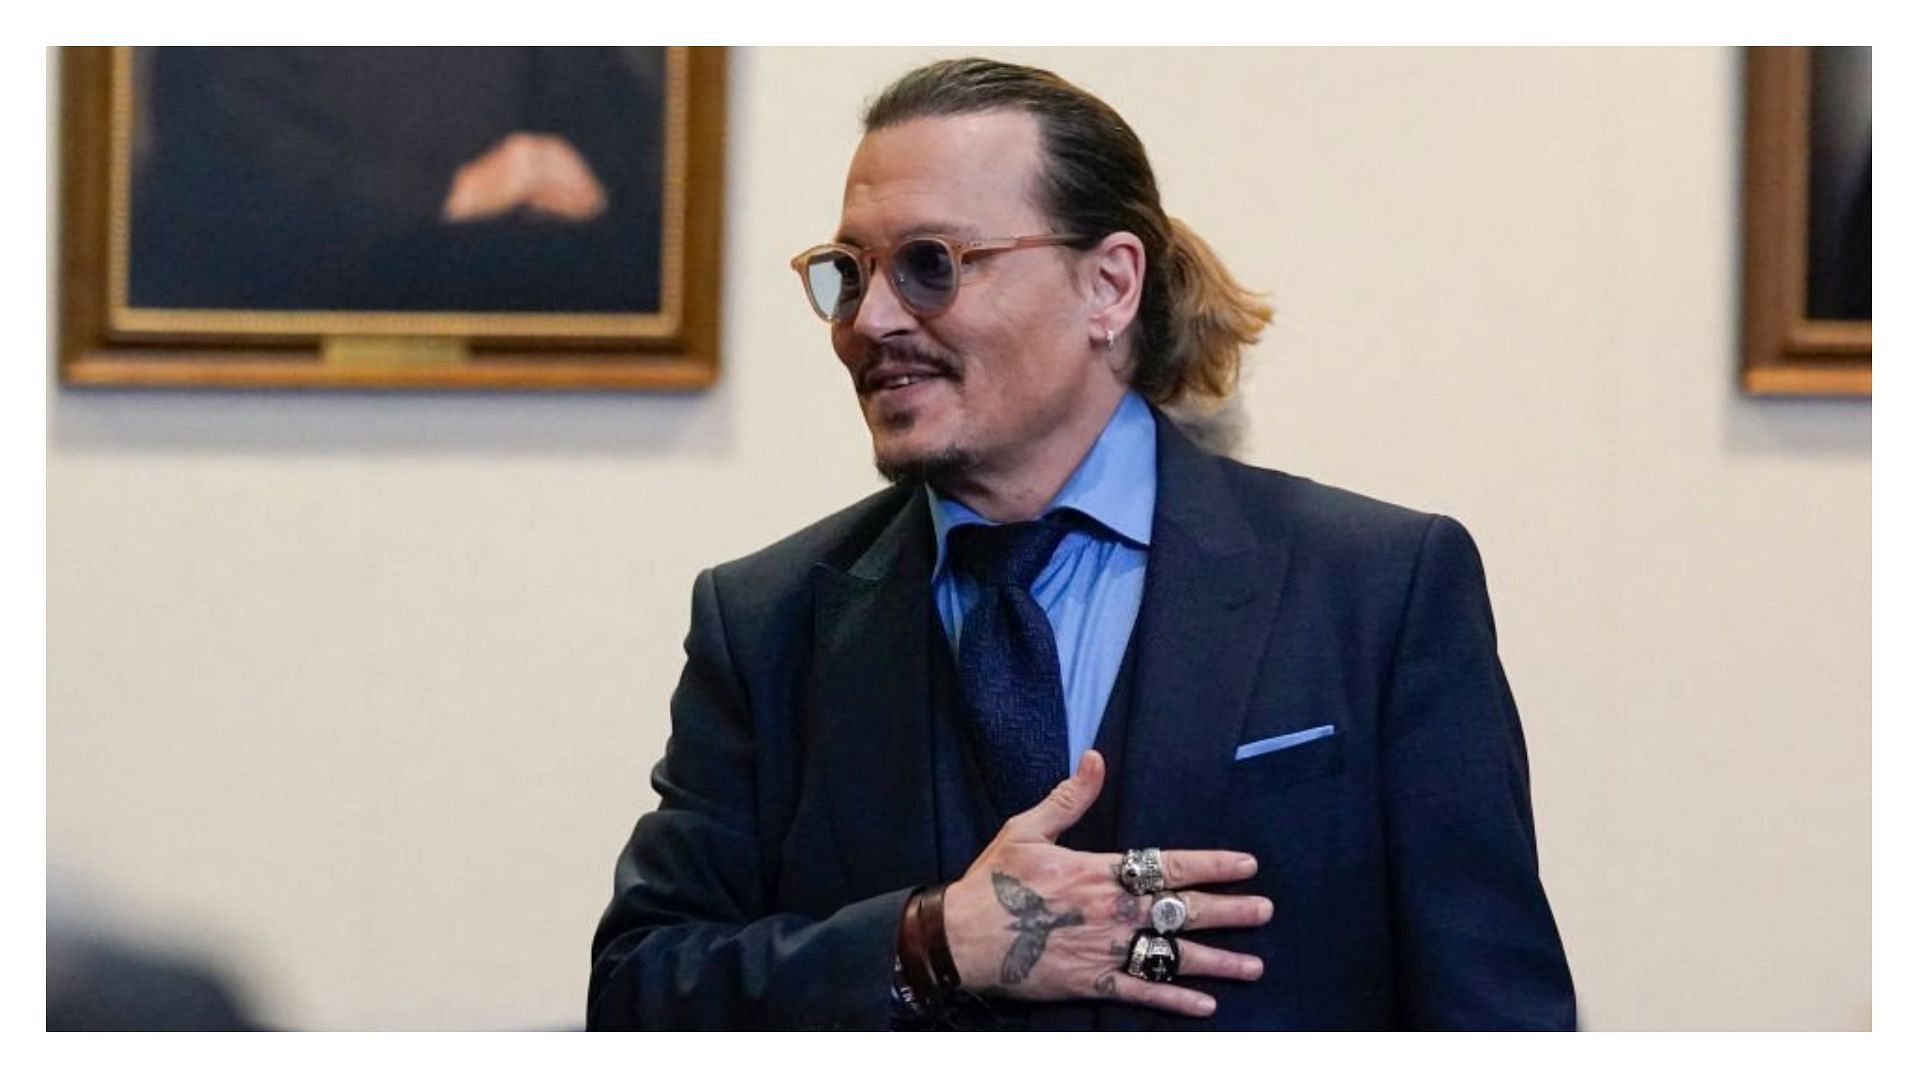 The jury announced the verdict in favor of Johnny Depp last week (Image via Steve Helber/Getty Images)